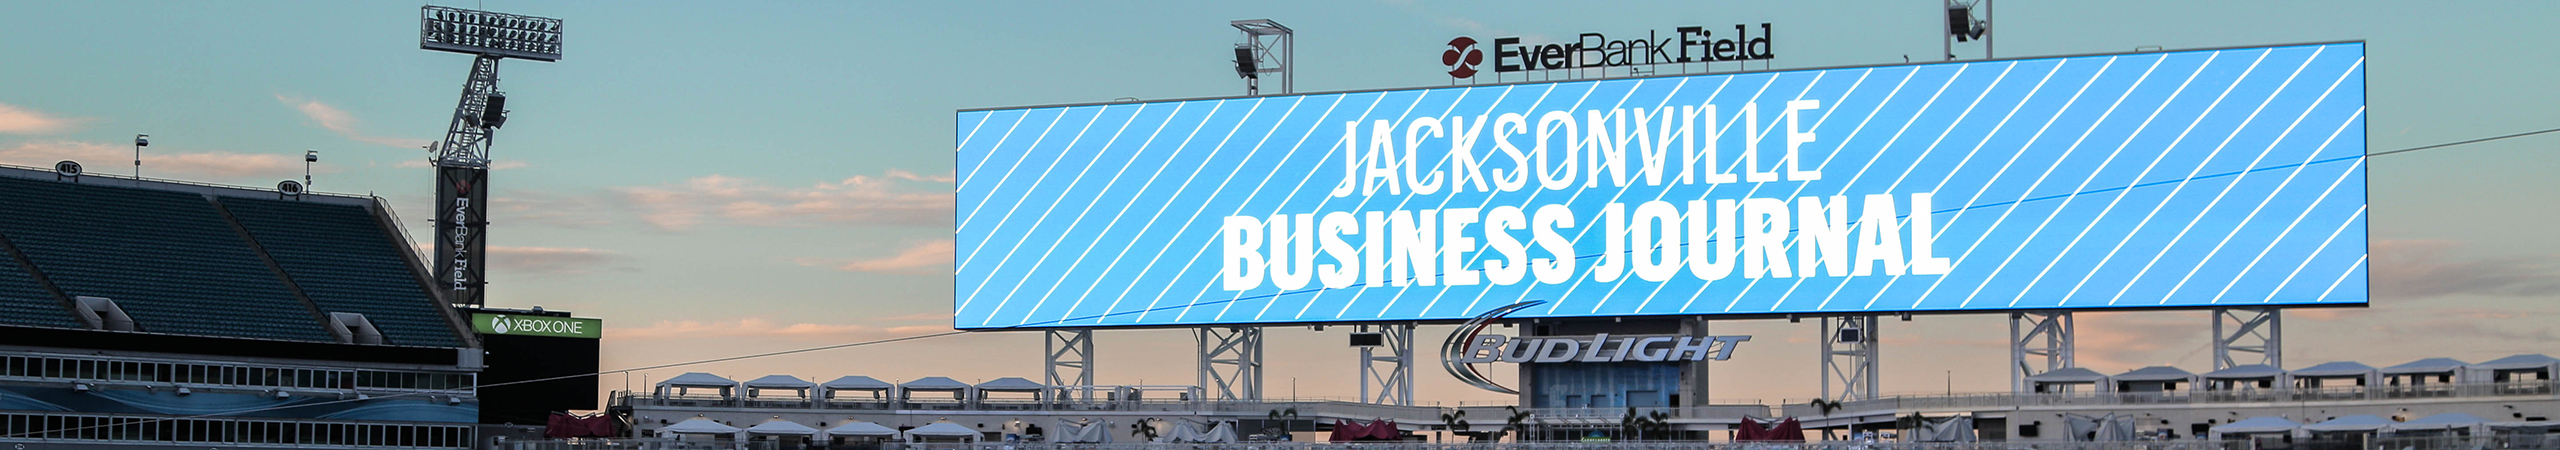 Jacksonville Business Journal Winners Circle